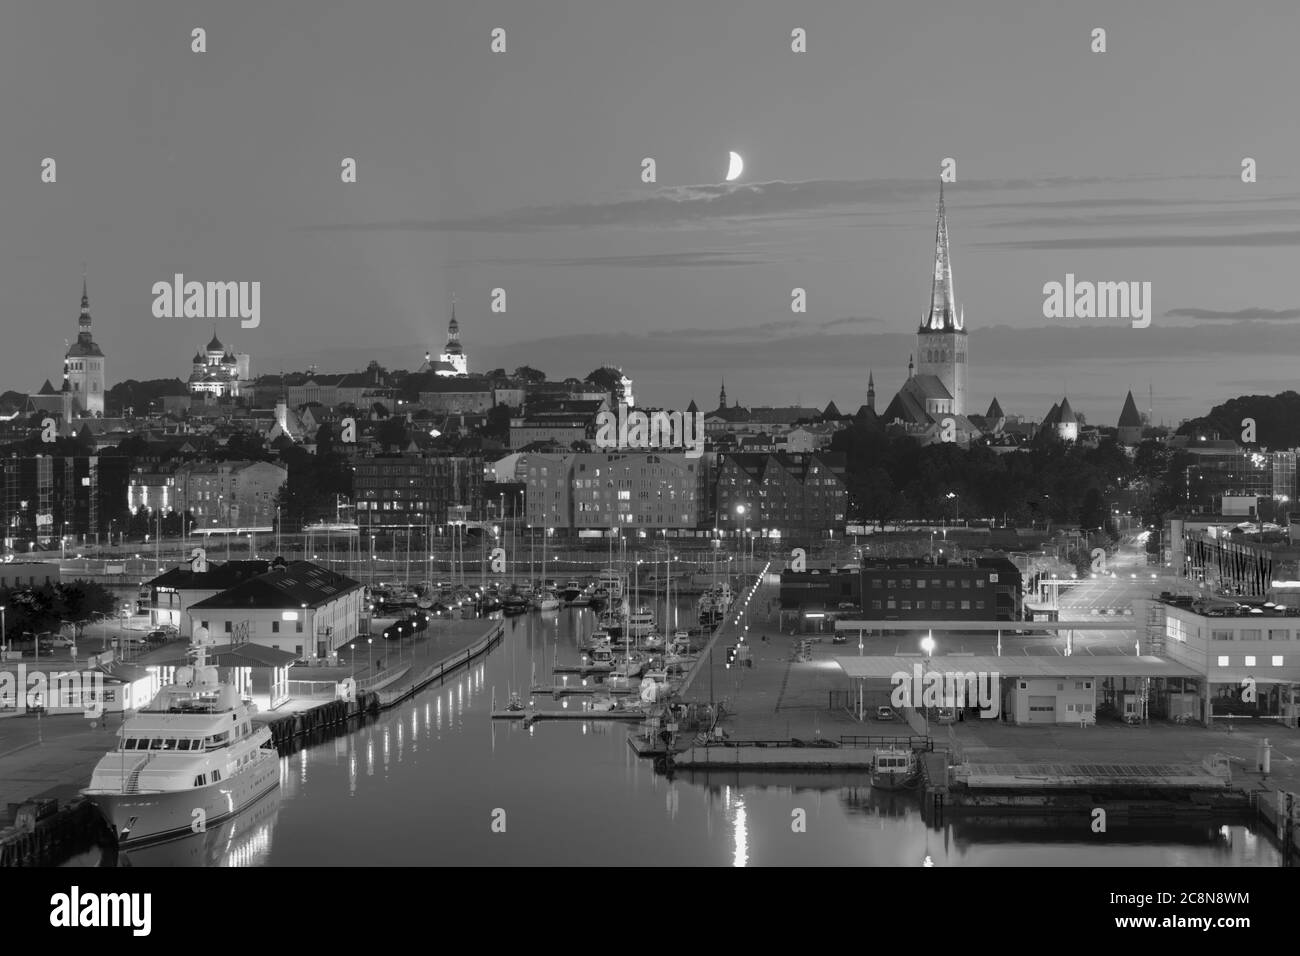 Tallinn, Estonia - July 29, 2017: Night cityscape of Estonian capital city viewed from the port. Black and wight image Stock Photo